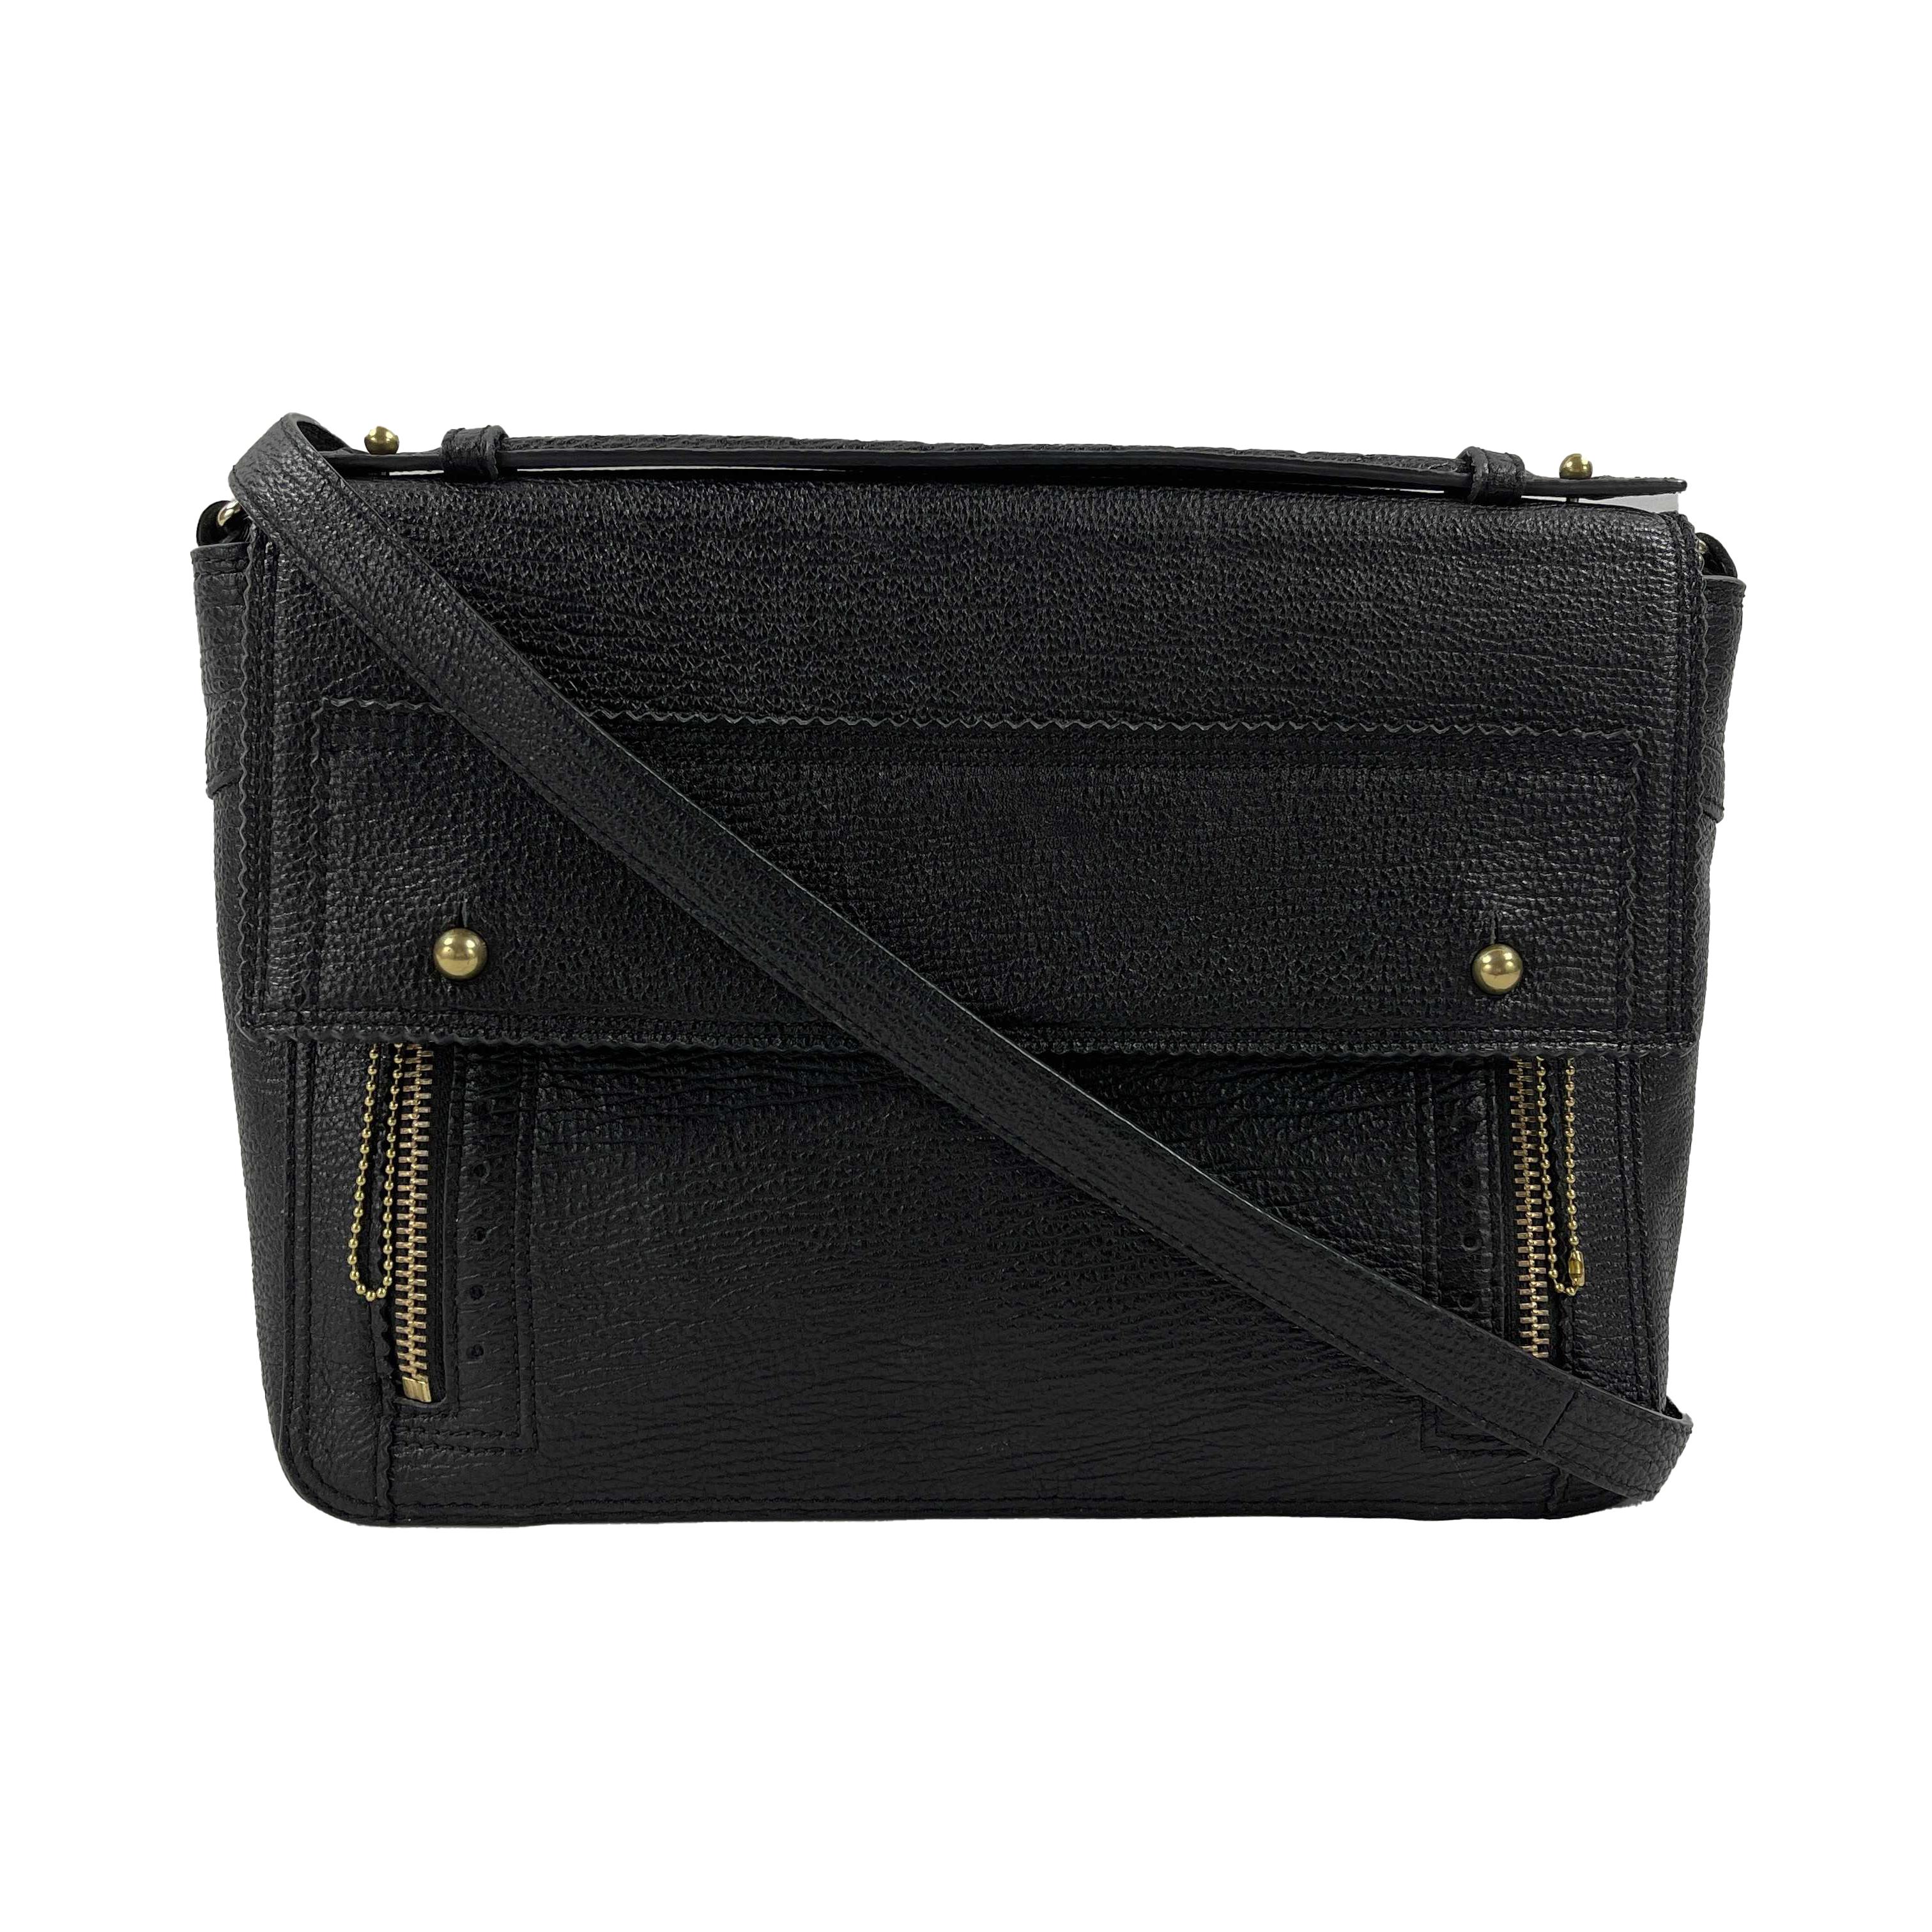 3.1 Phillip Lim Grained Leather Black / Gold Pashli Messenger Bag For Sale 3